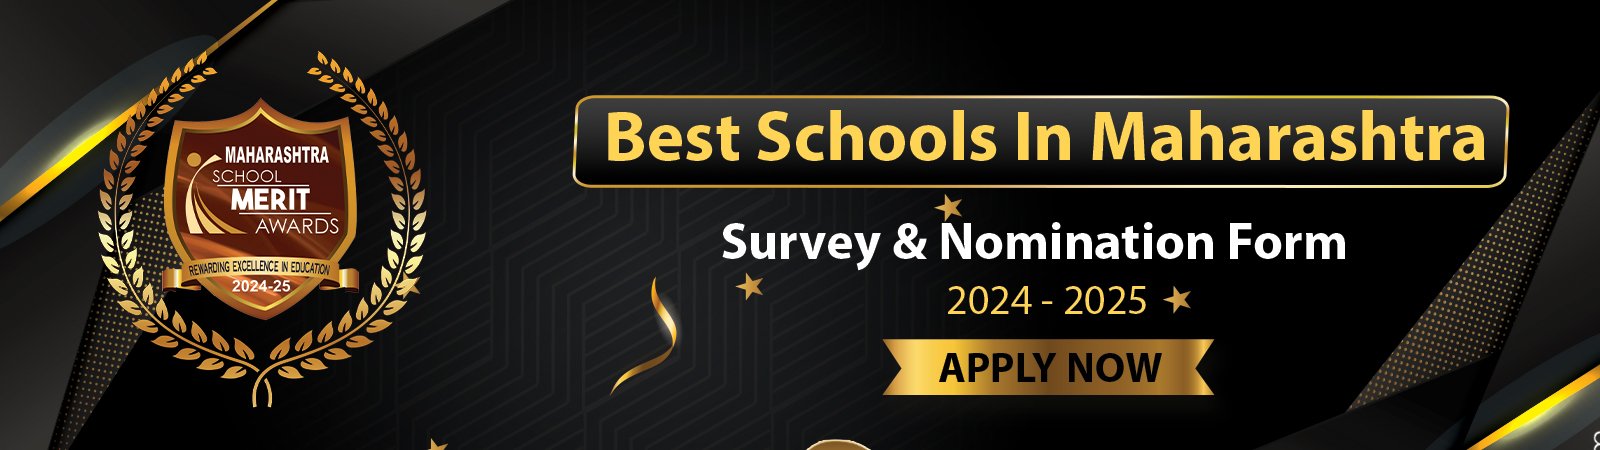 Best Schools in Maharashtra Survey Nomination Form 2024-25